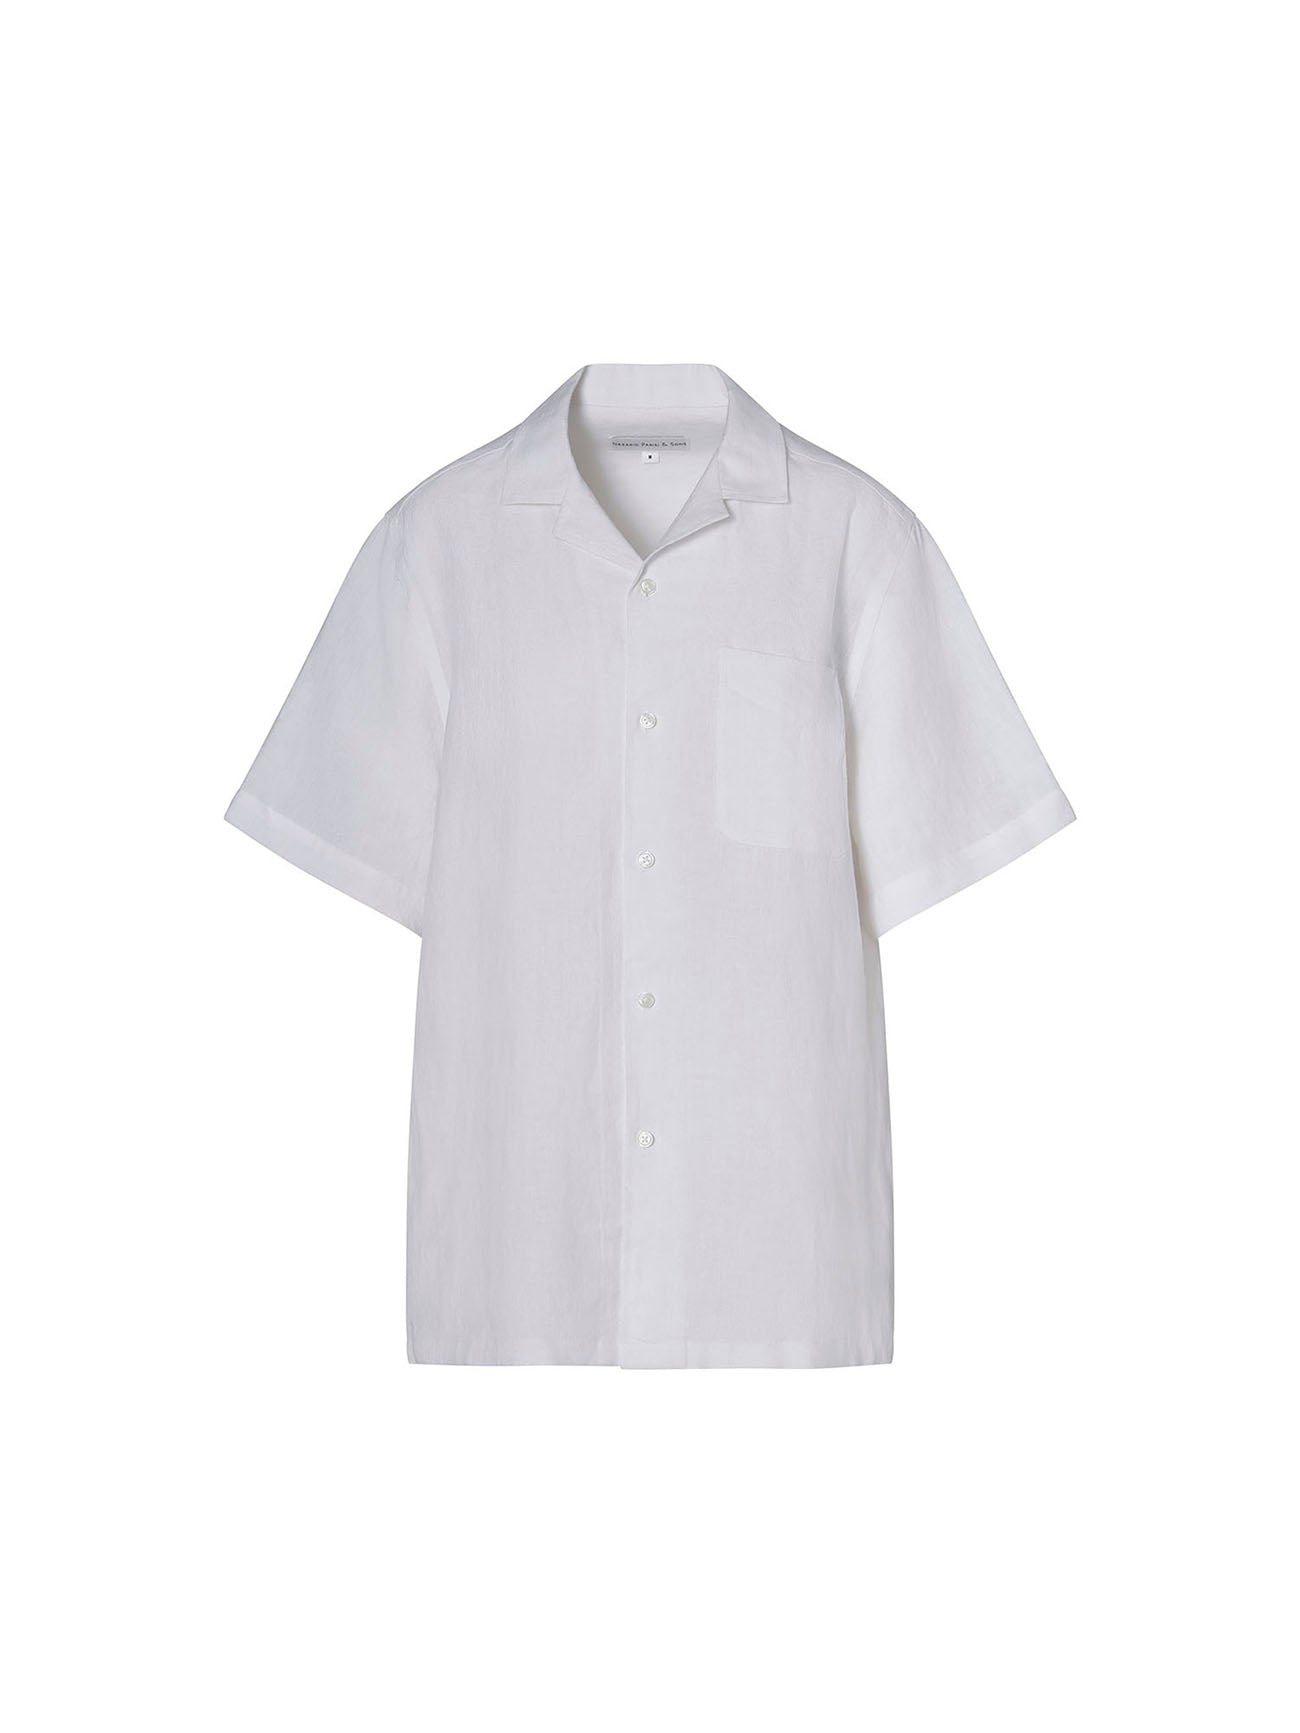 Formentera White Short Sleeve Shirt